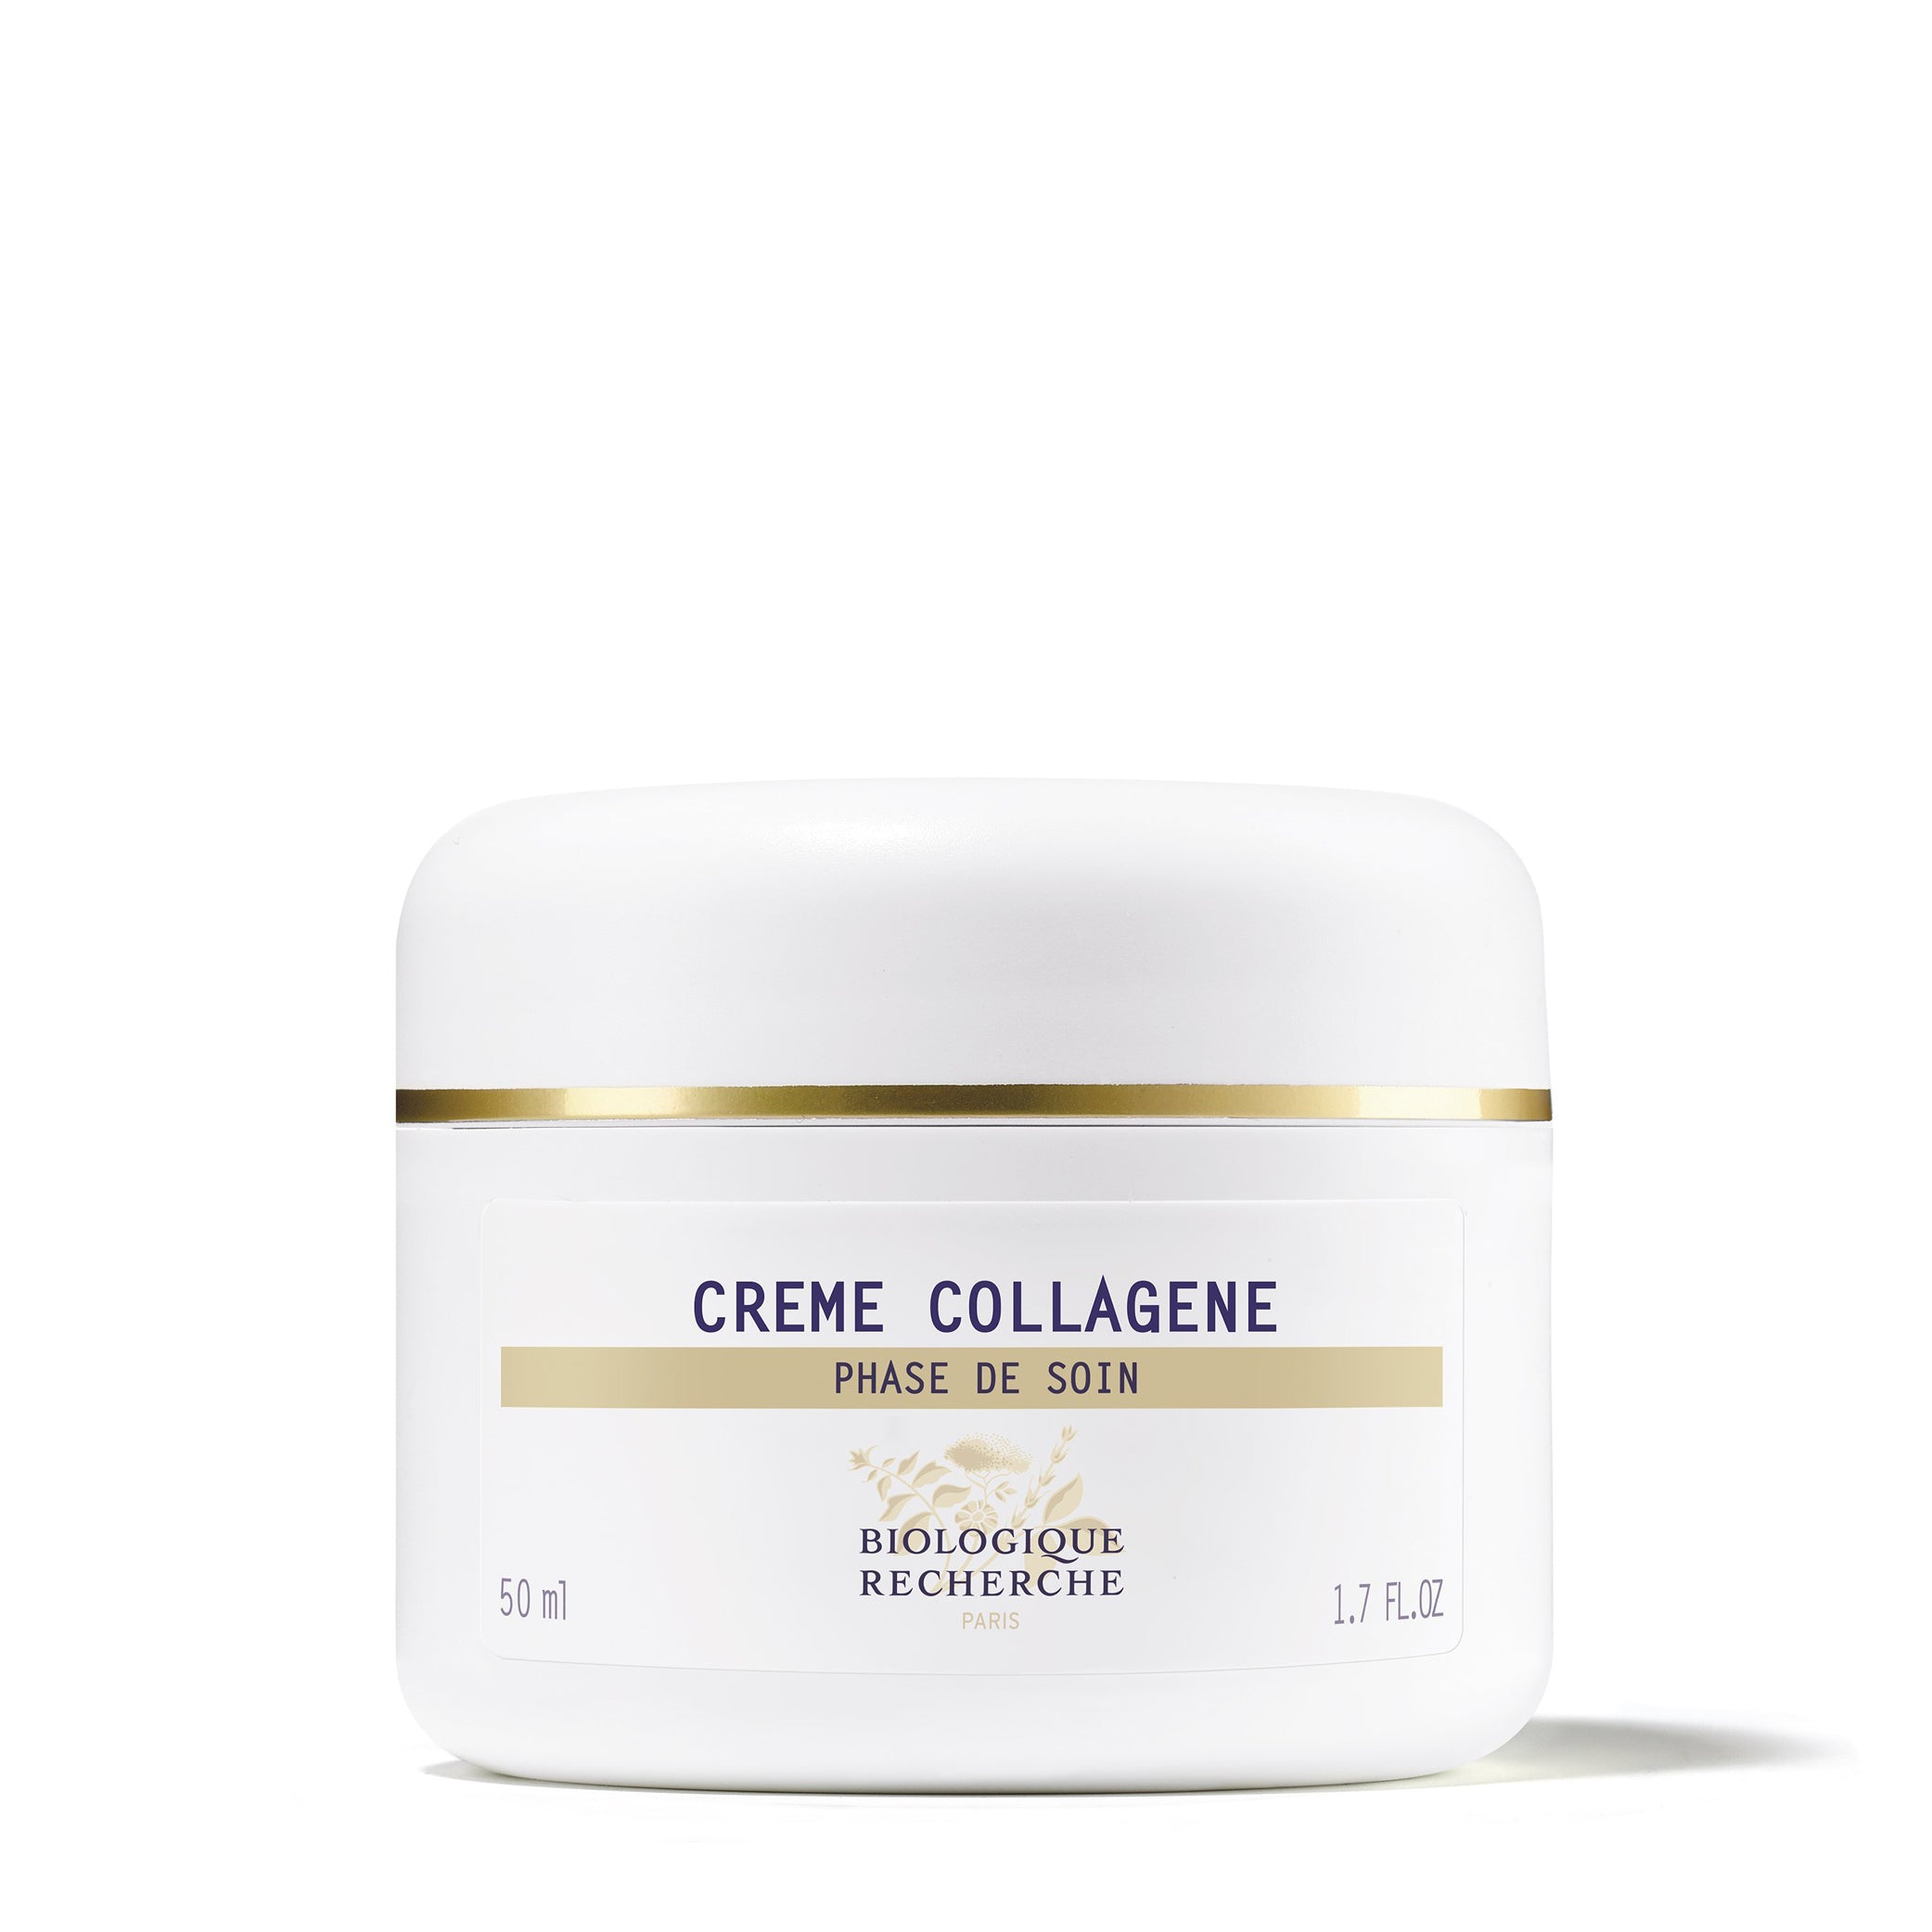 Crème Collagene